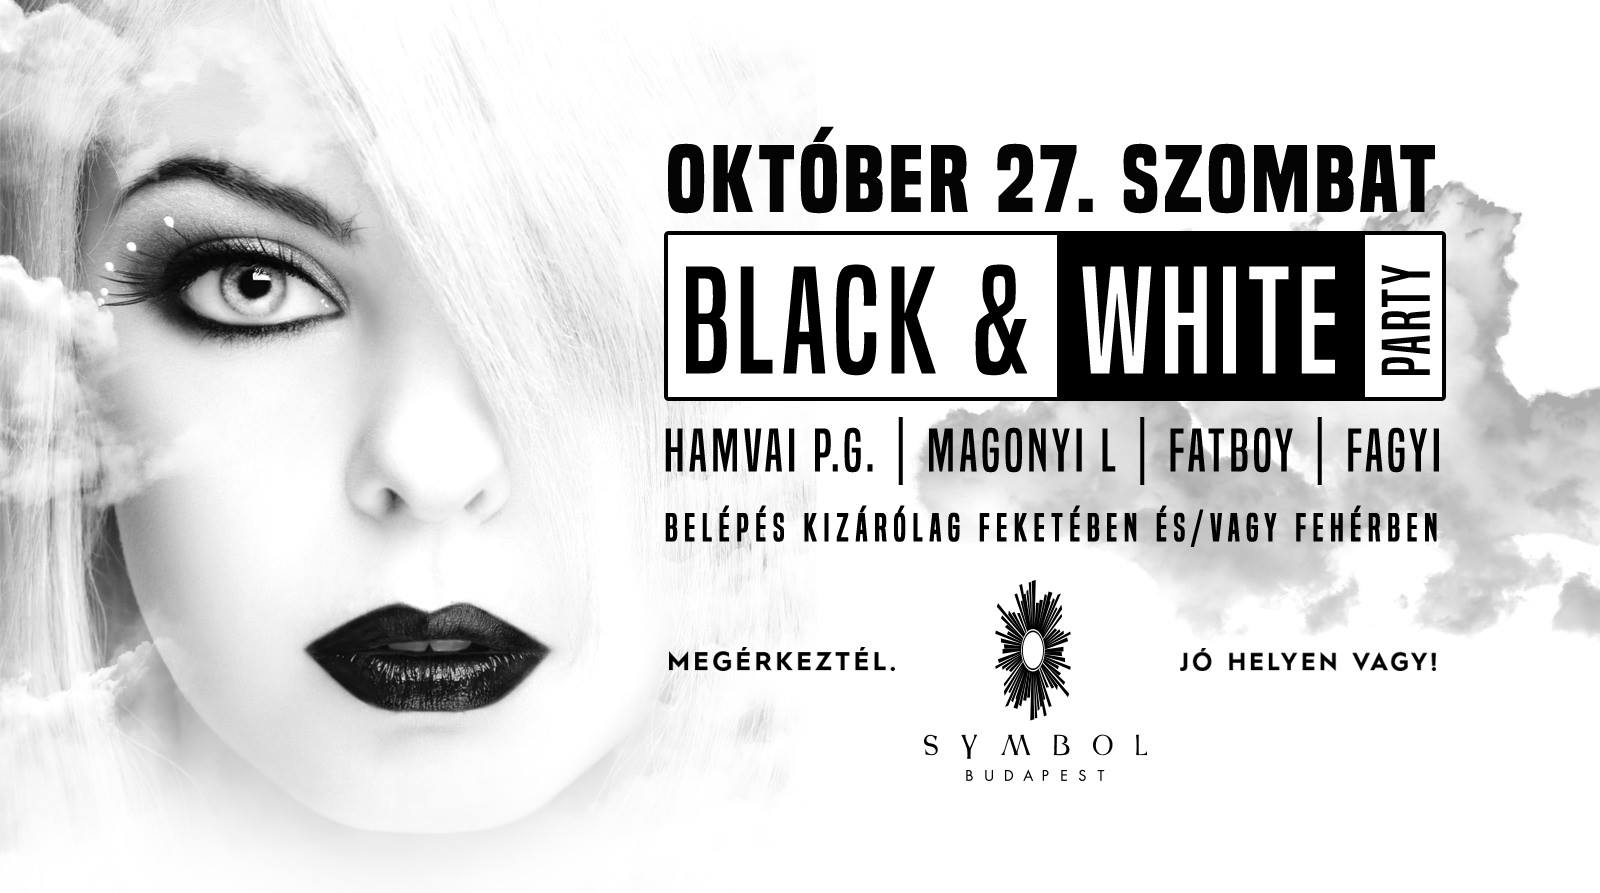 Black & White Party: Hamvai PG, Magonyi L, Fatboy, Fagyi